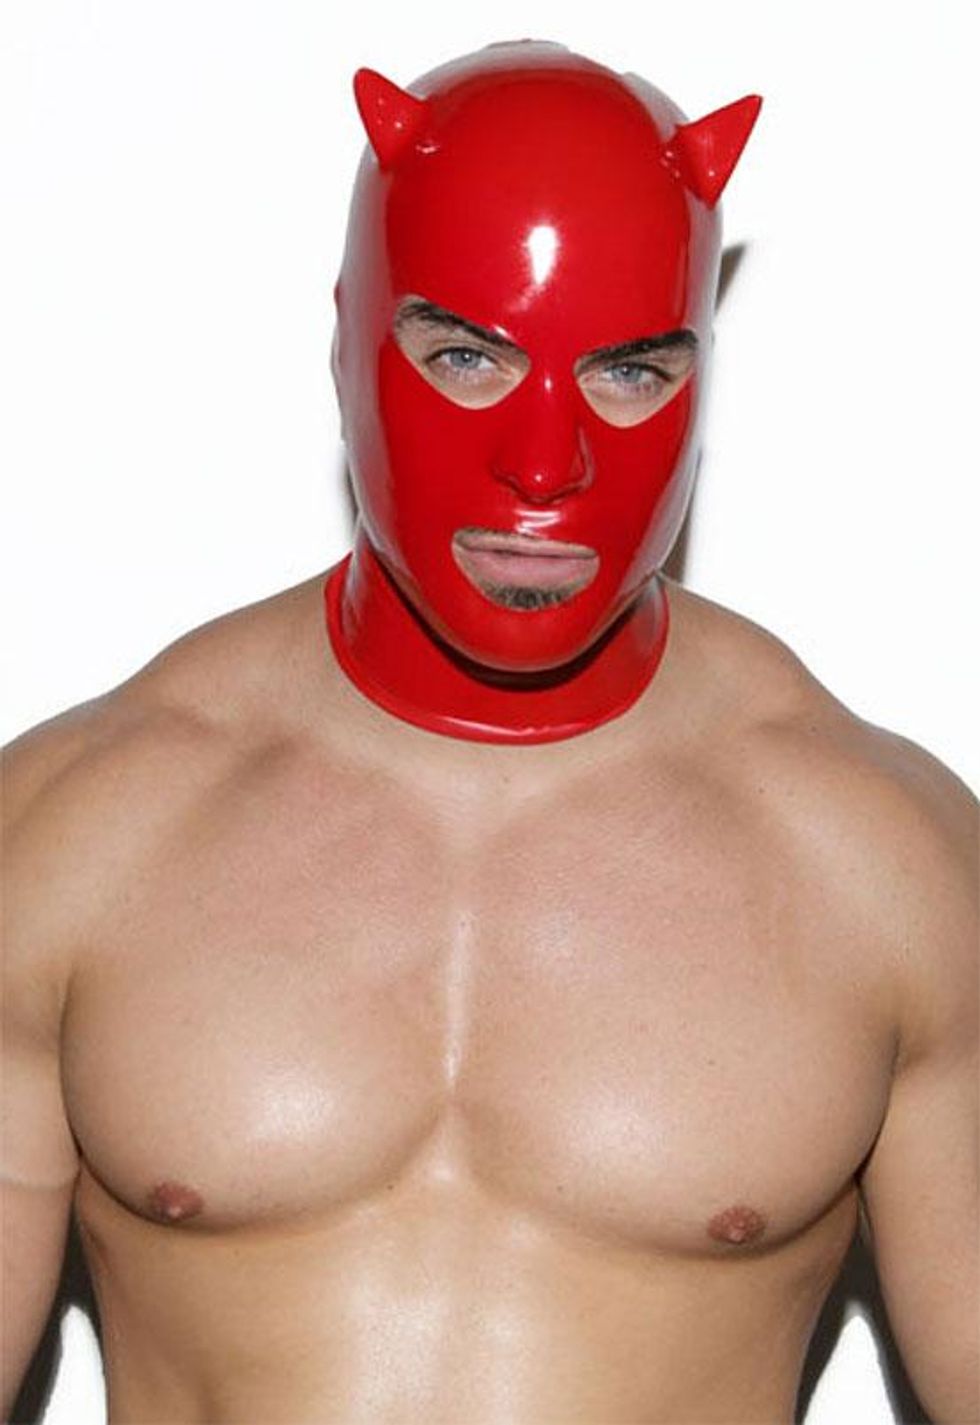 3. Slickitup's Red Devil Latex Mask ($164)